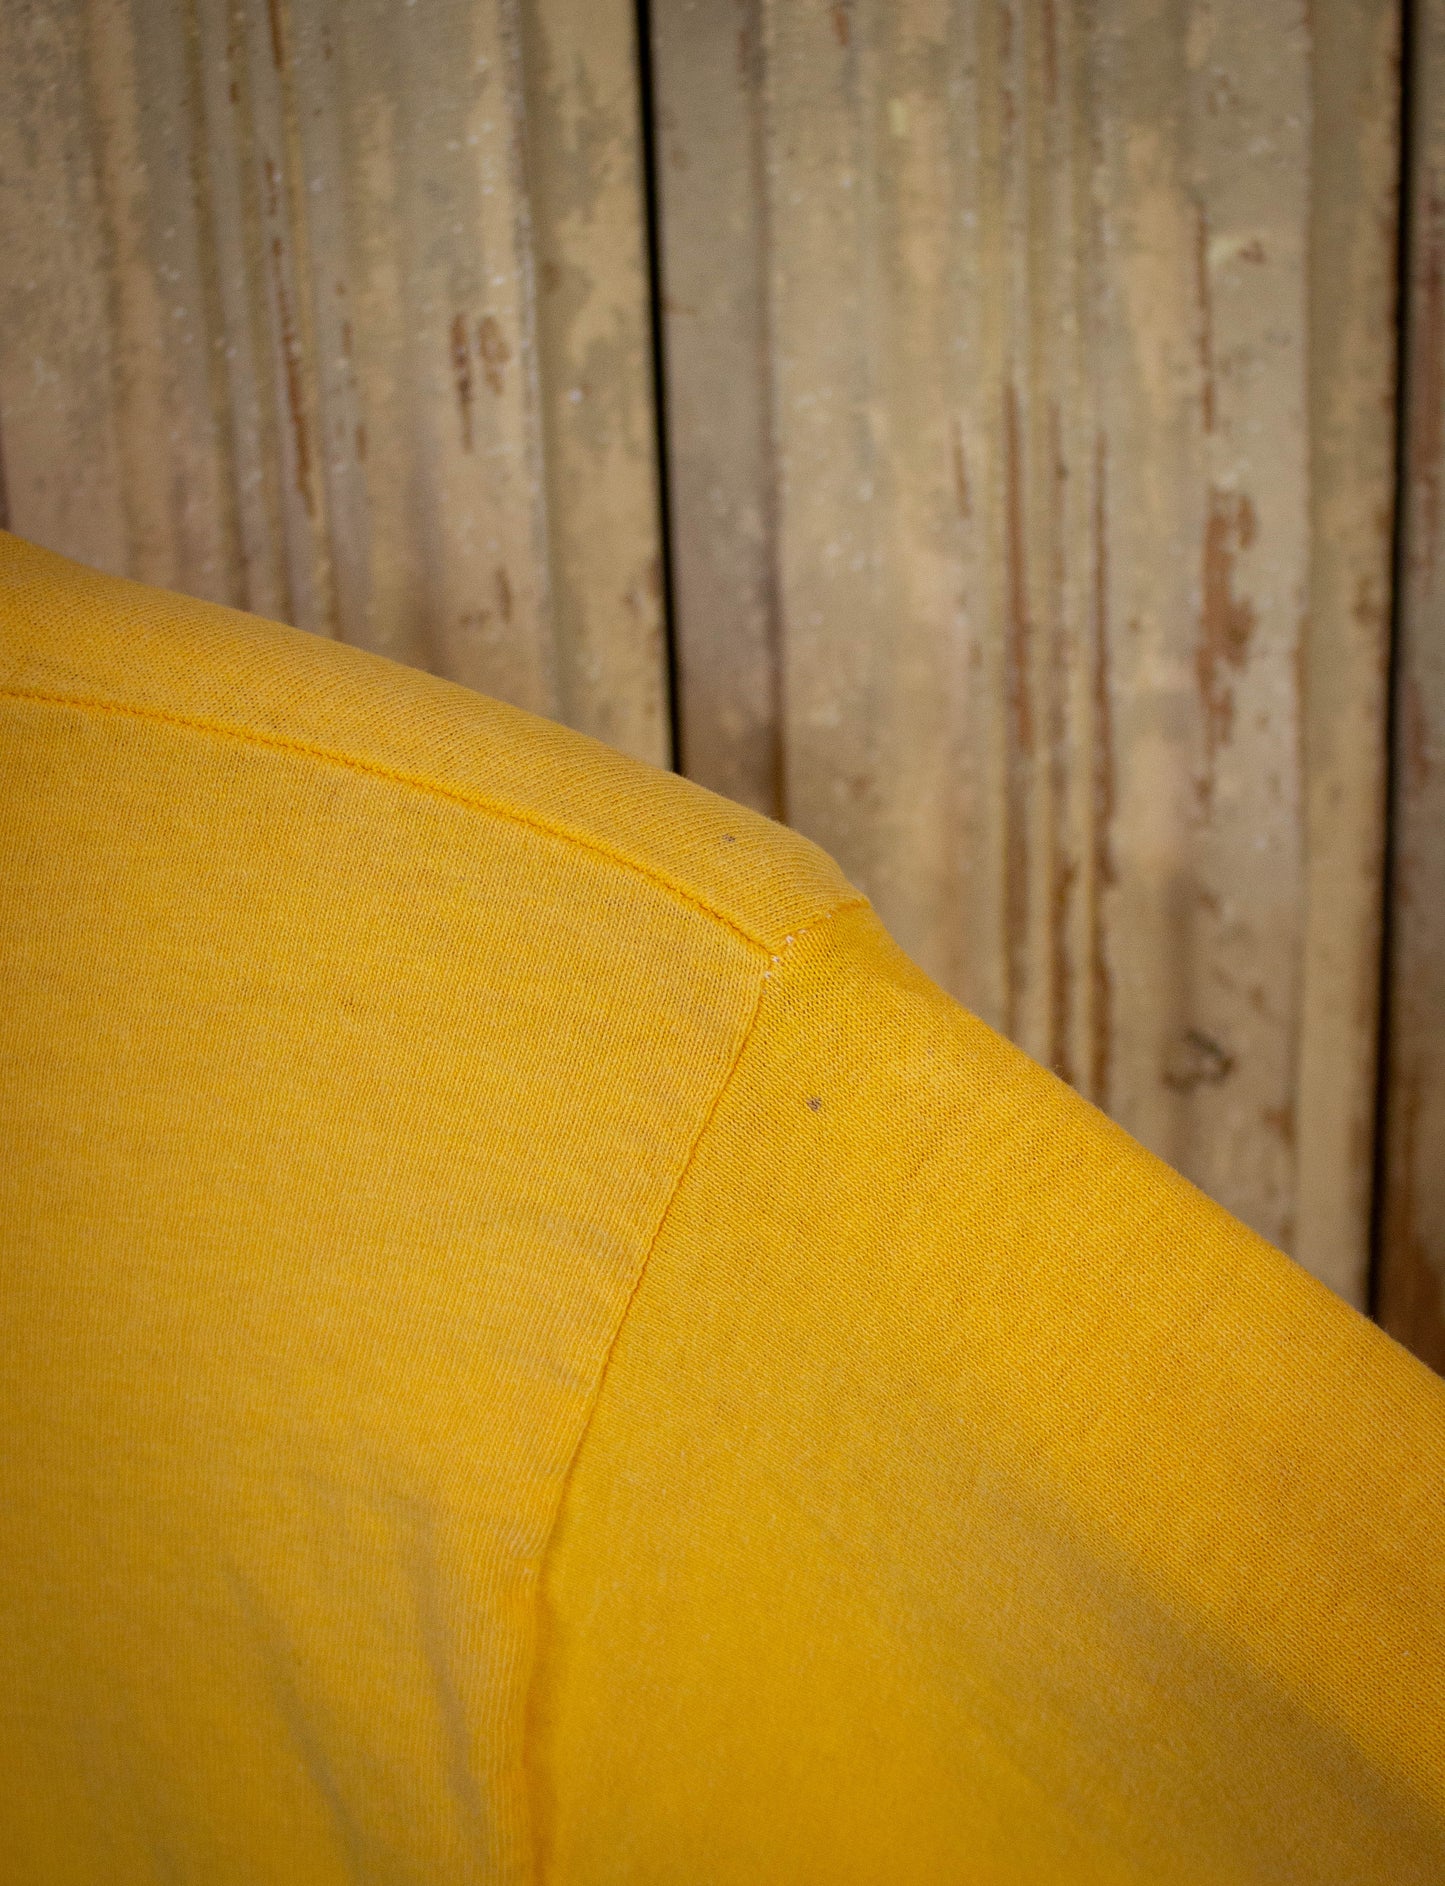 Vintage Frampton Comes Alive Concert T Shirt 70s Yellow Medium - Large